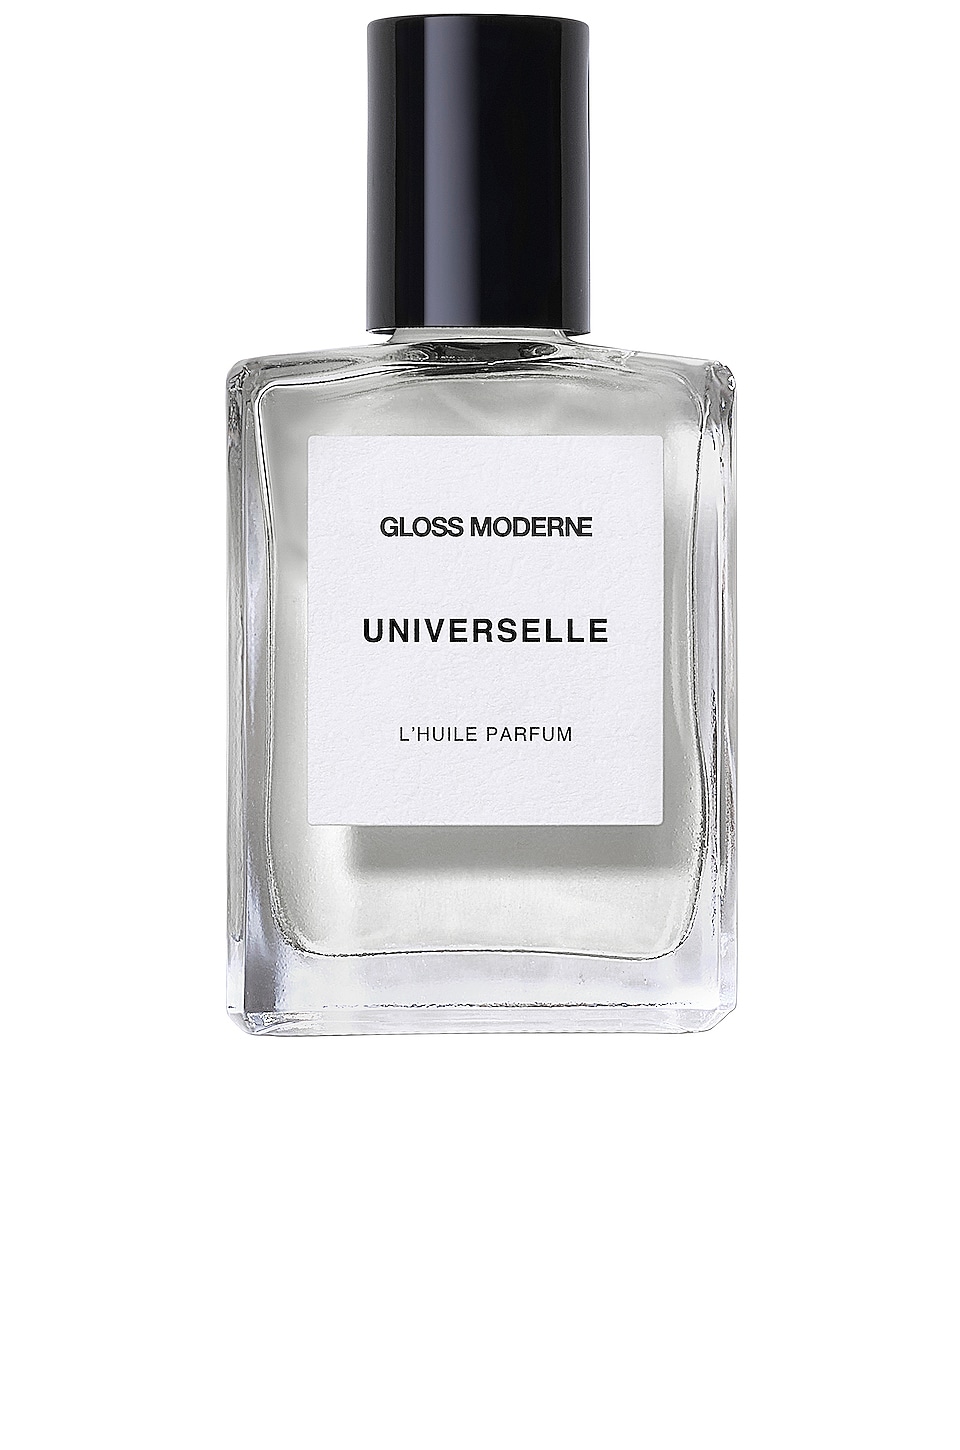 GLOSS MODERNE Universelle Clean Luxury Perfume Oil | REVOLVE